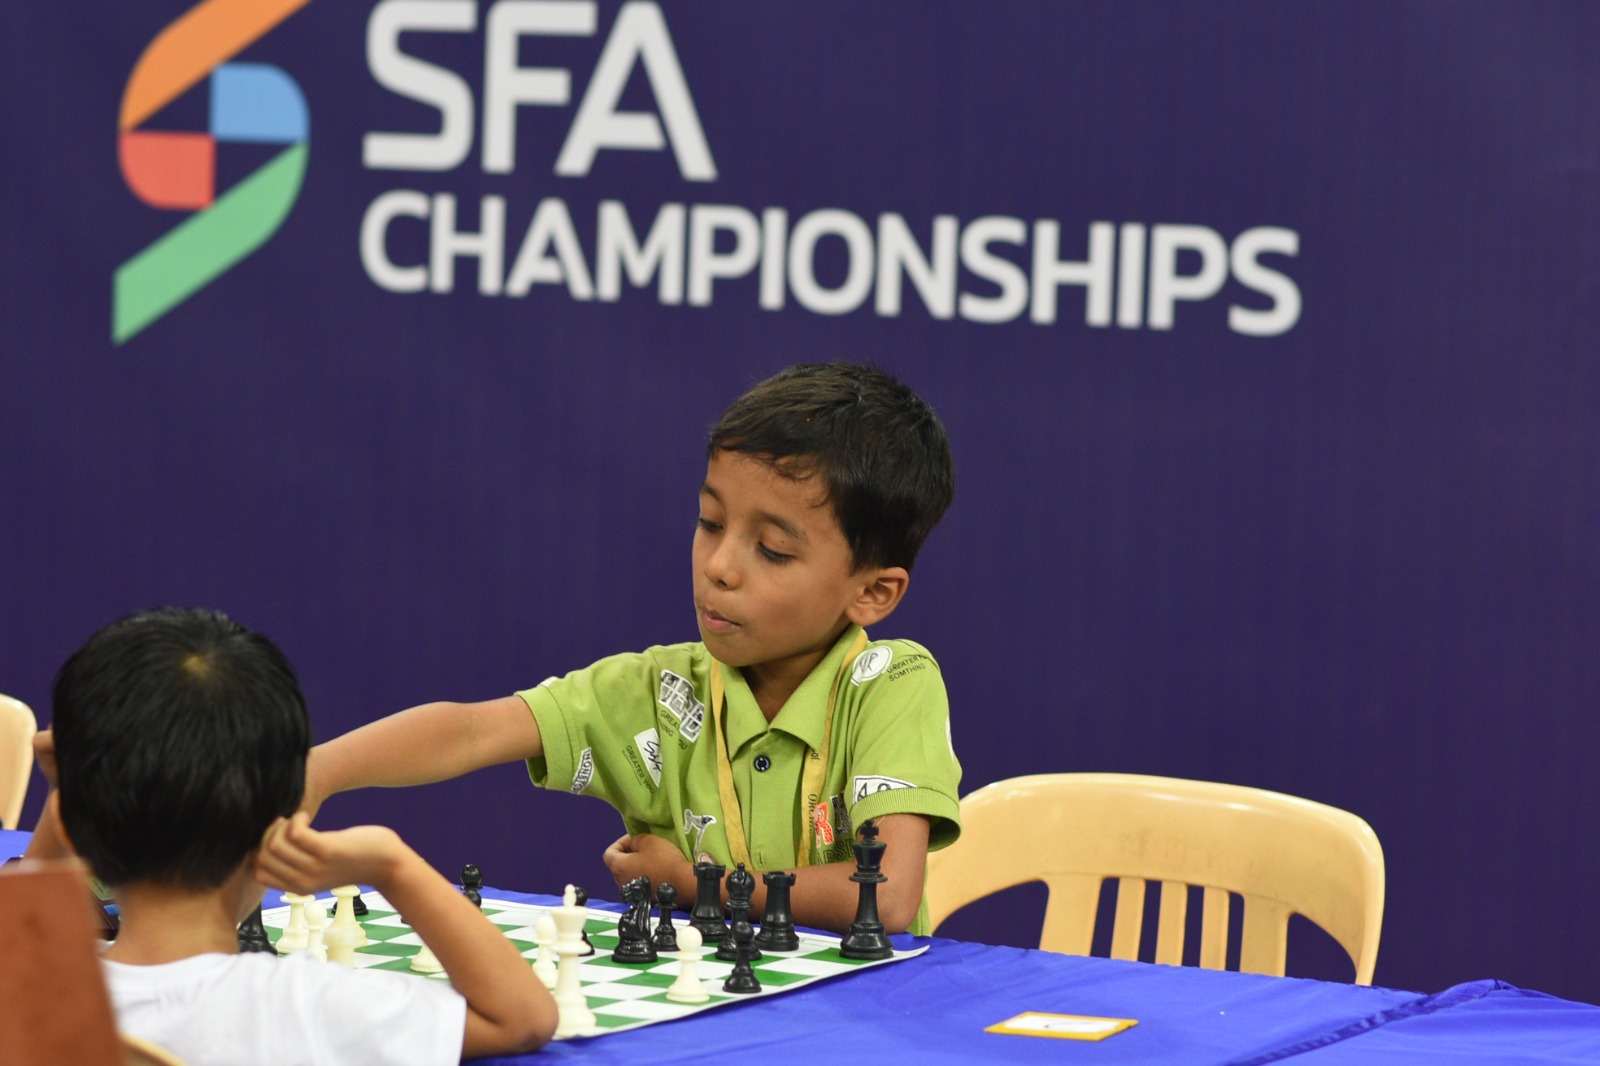 SFA Championship